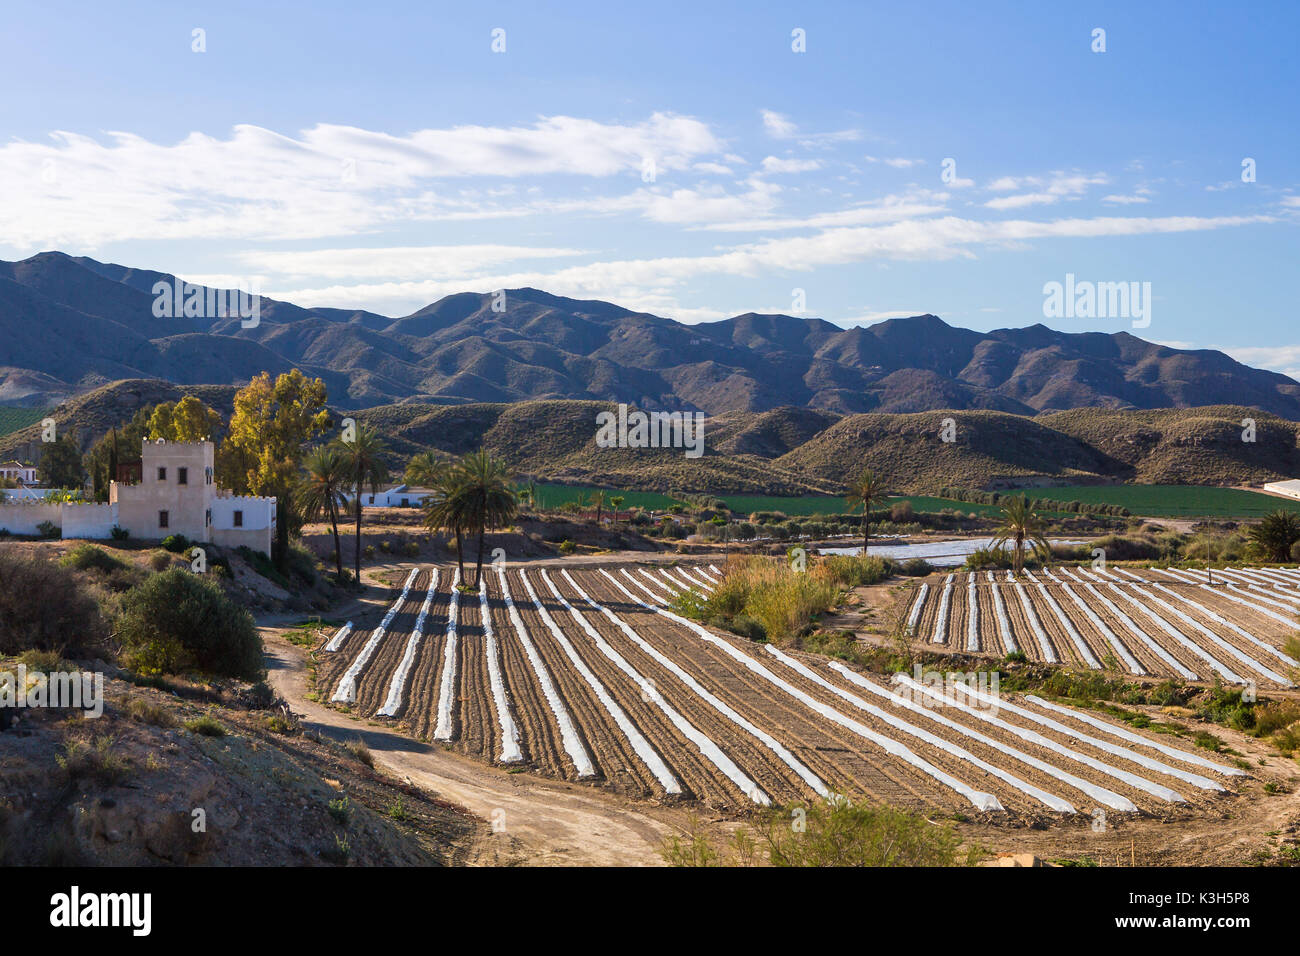 Spain, Almeria province, agriculture Stock Photo